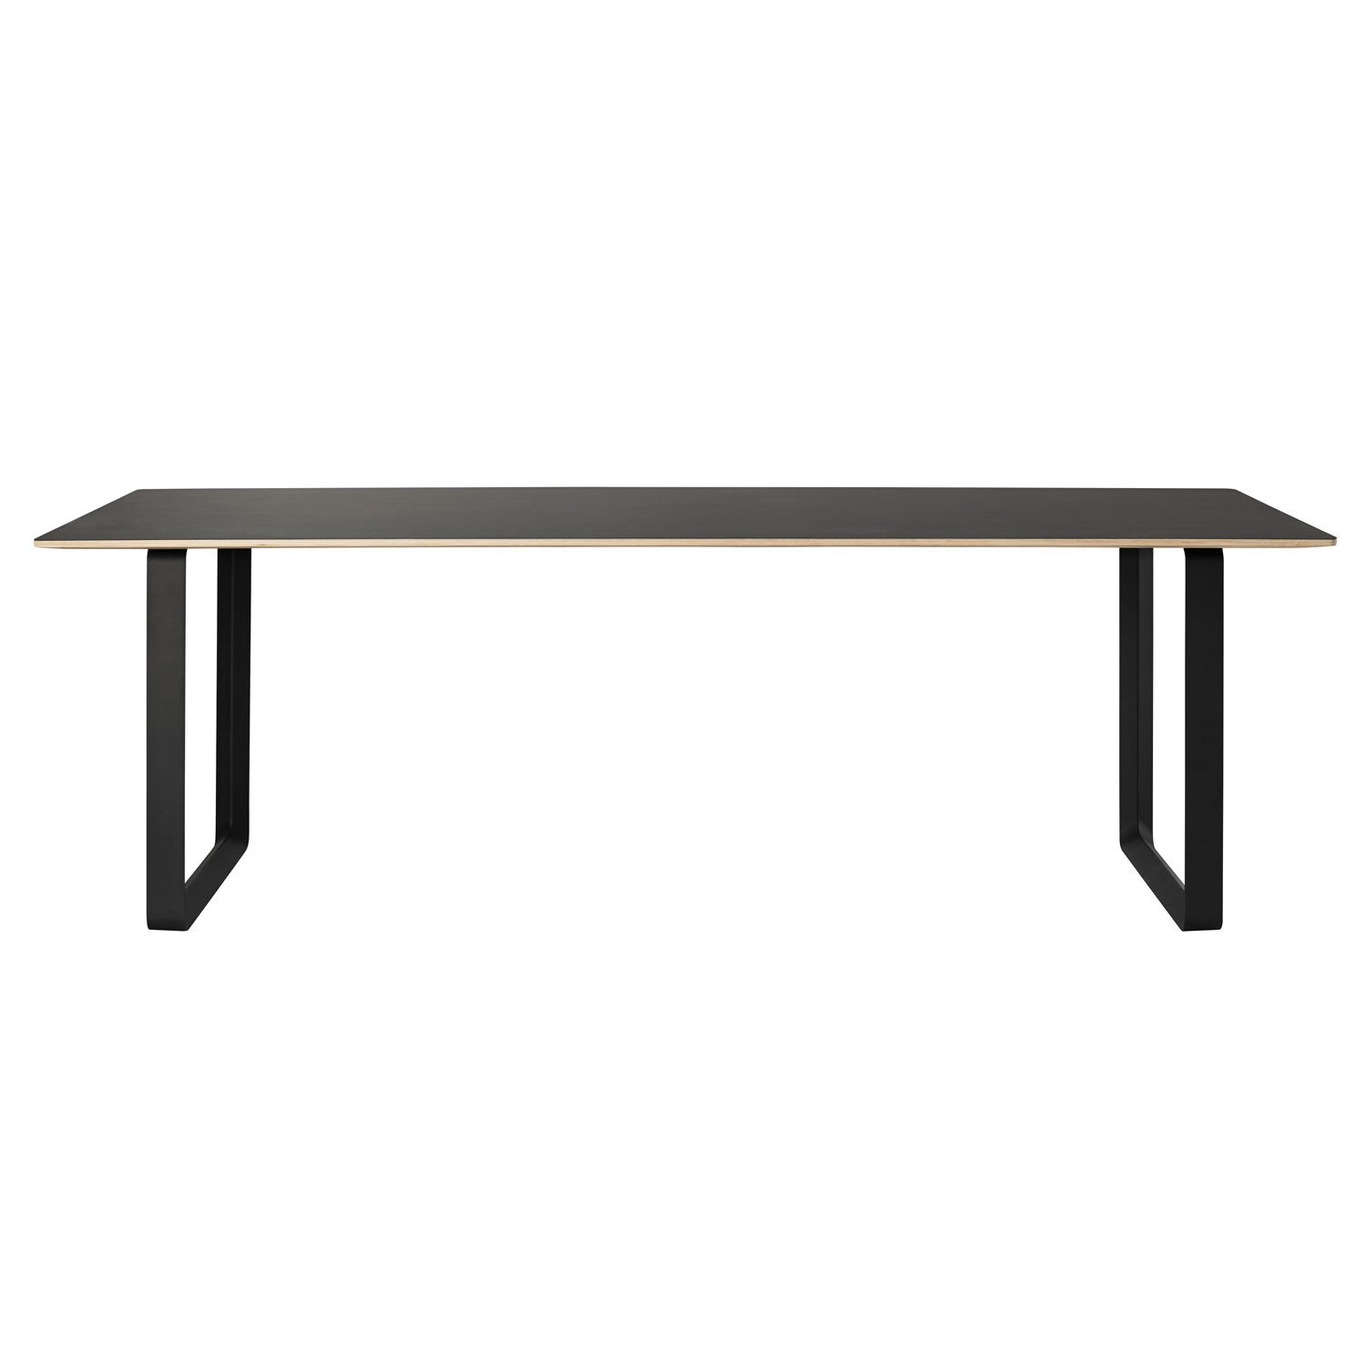 70/70 table 225 cm, black